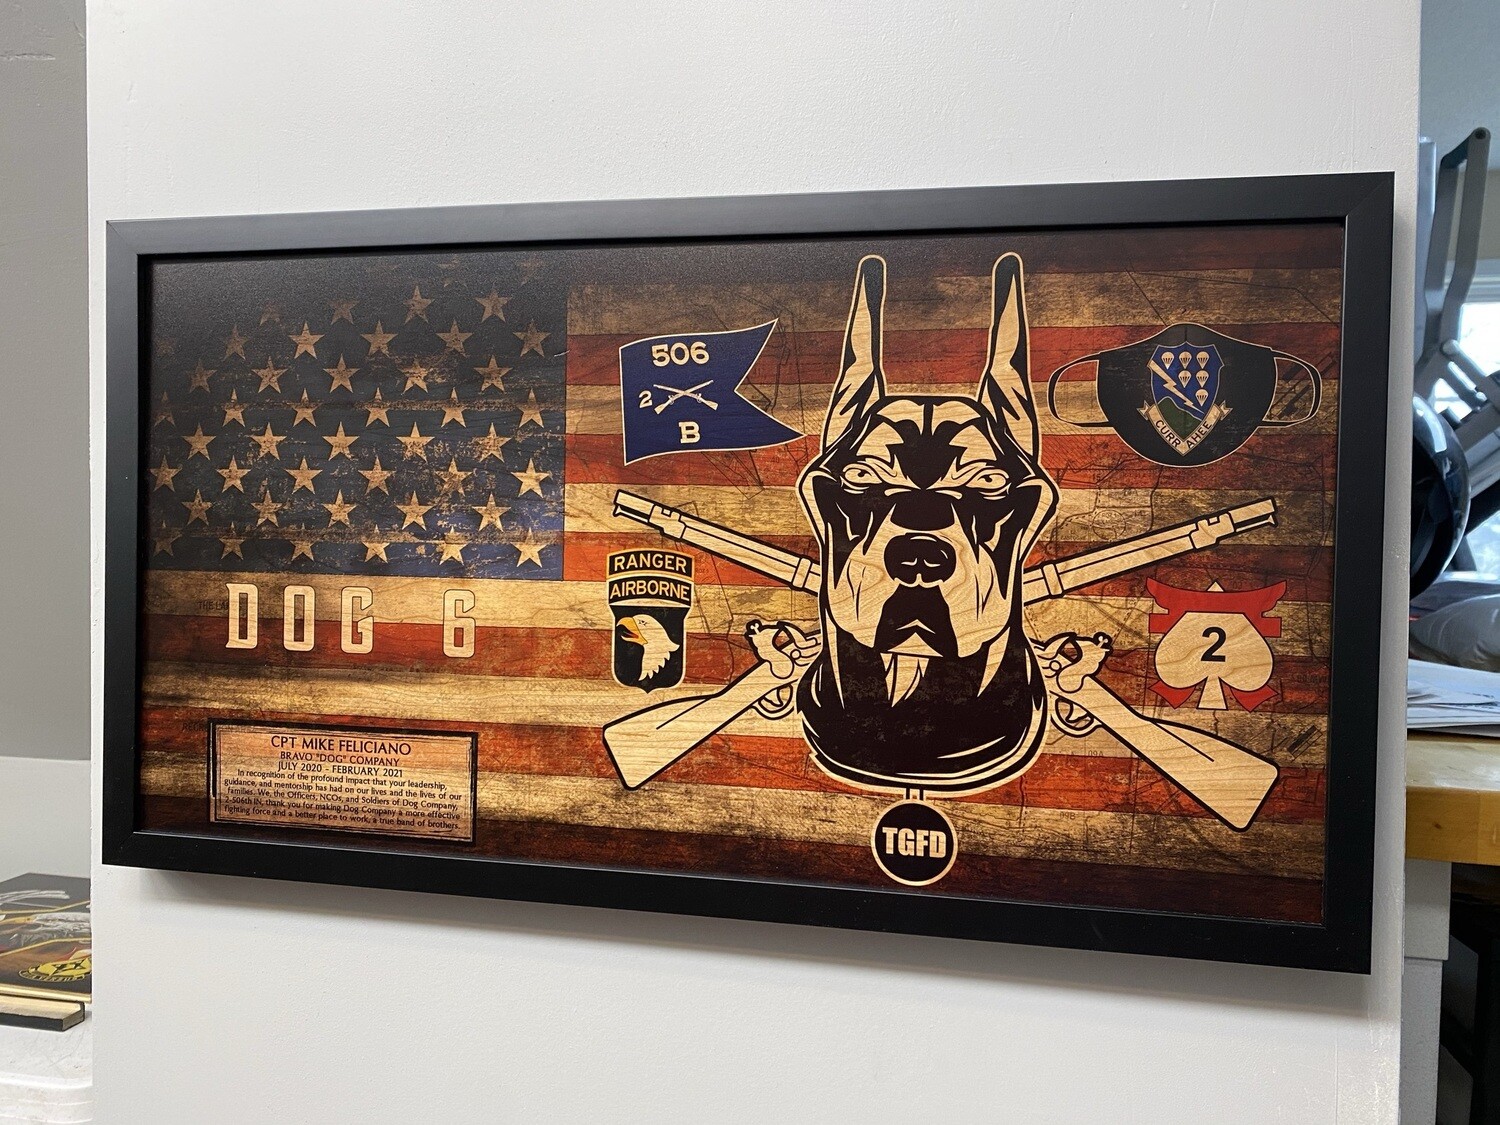 B Co "Dog" 2-506th Rustic Flag Plaque - 28.5"x15.75"